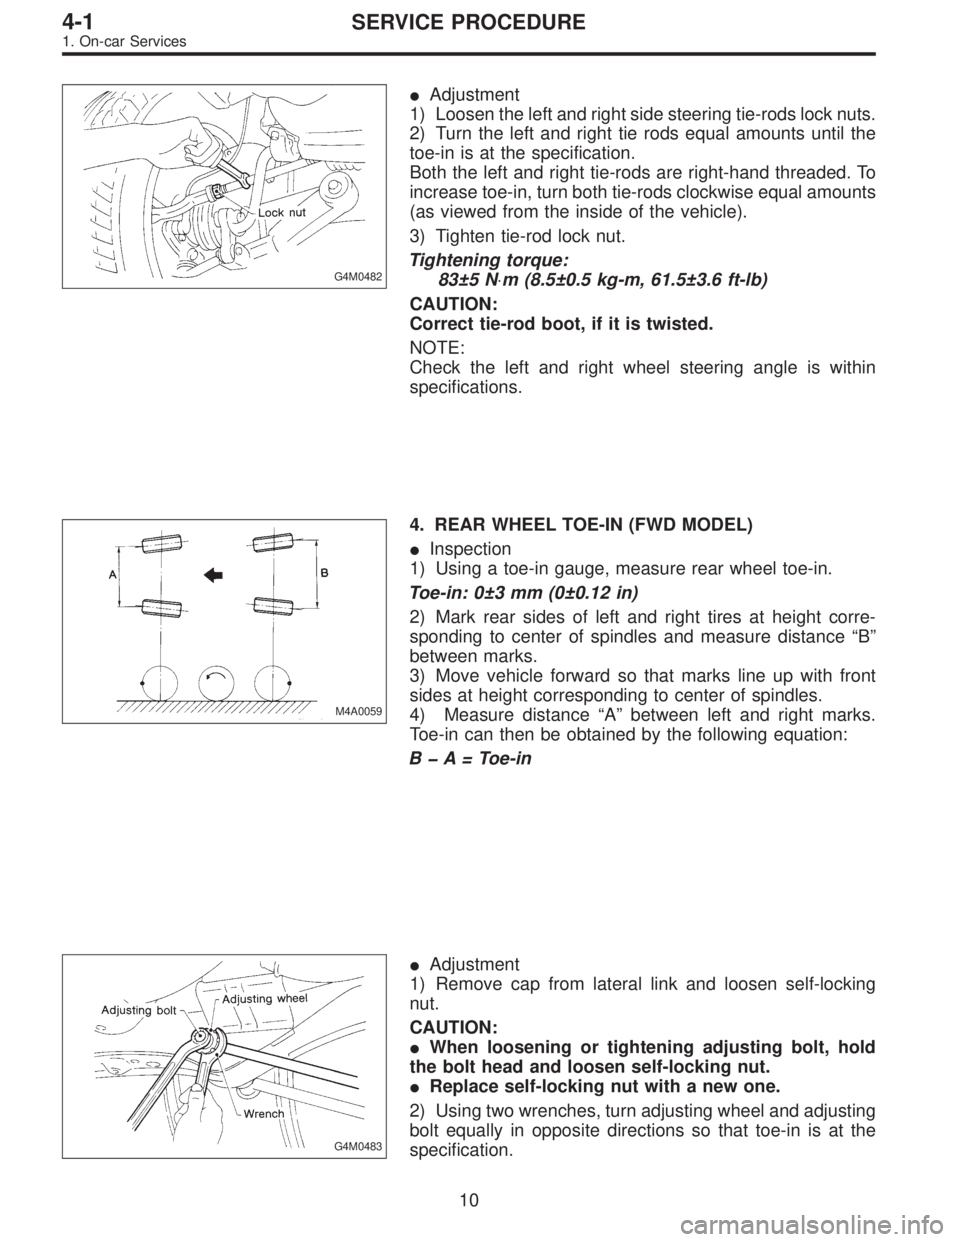 SUBARU LEGACY 1995  Service Repair Manual G4M0482
Adjustment
1) Loosen the left and right side steering tie-rods lock nuts.
2) Turn the left and right tie rods equal amounts until the
toe-in is at the specification.
Both the left and right t